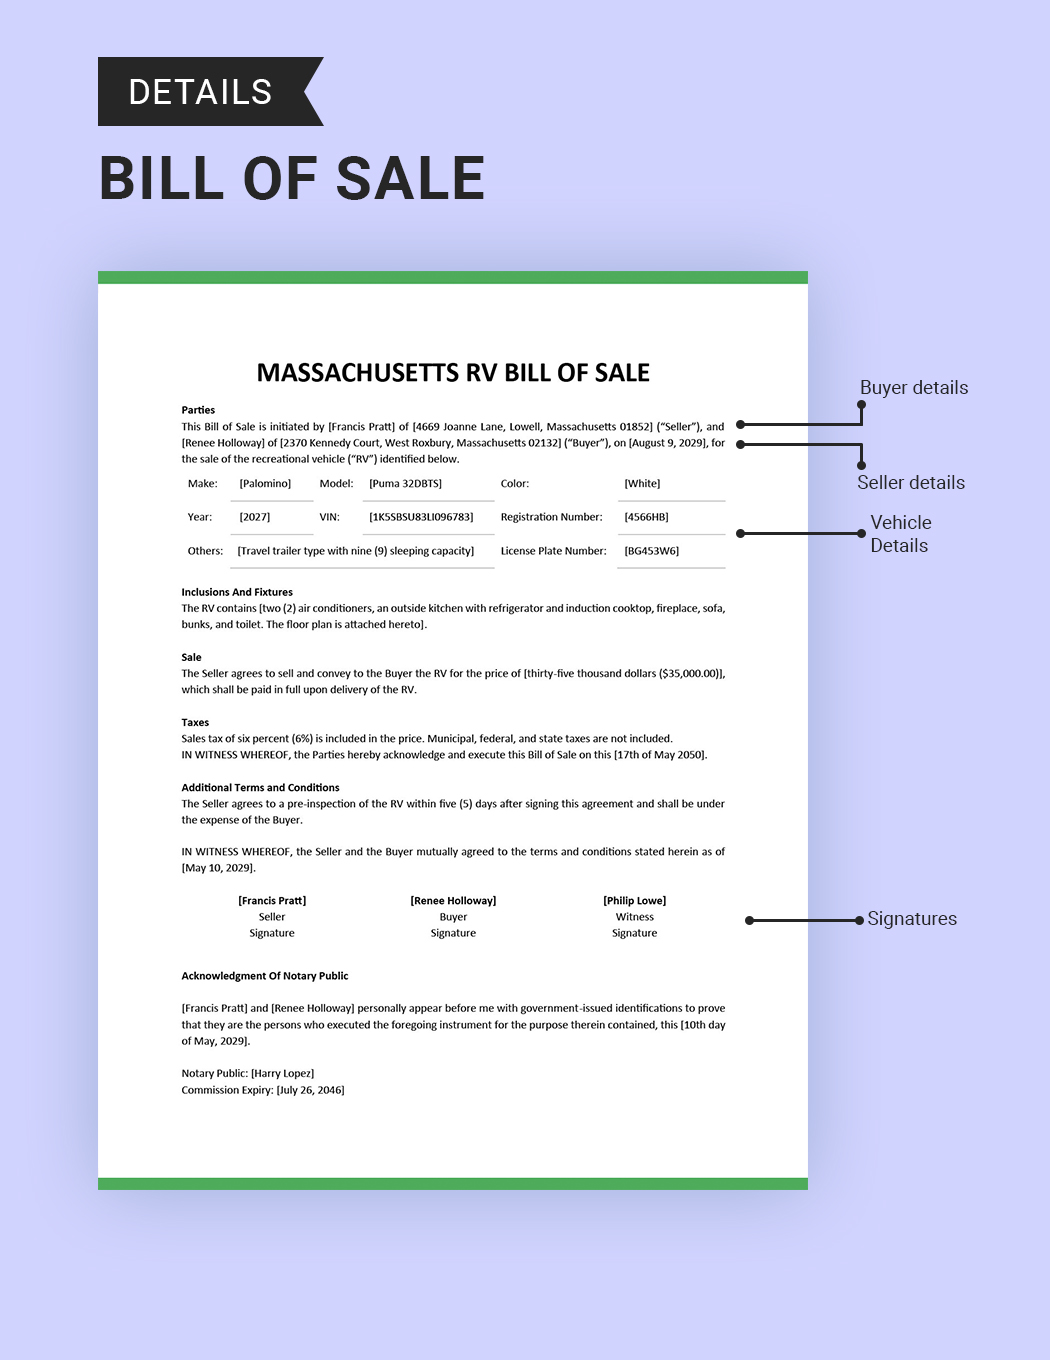 Massachusetts RV Bill of Sale Template